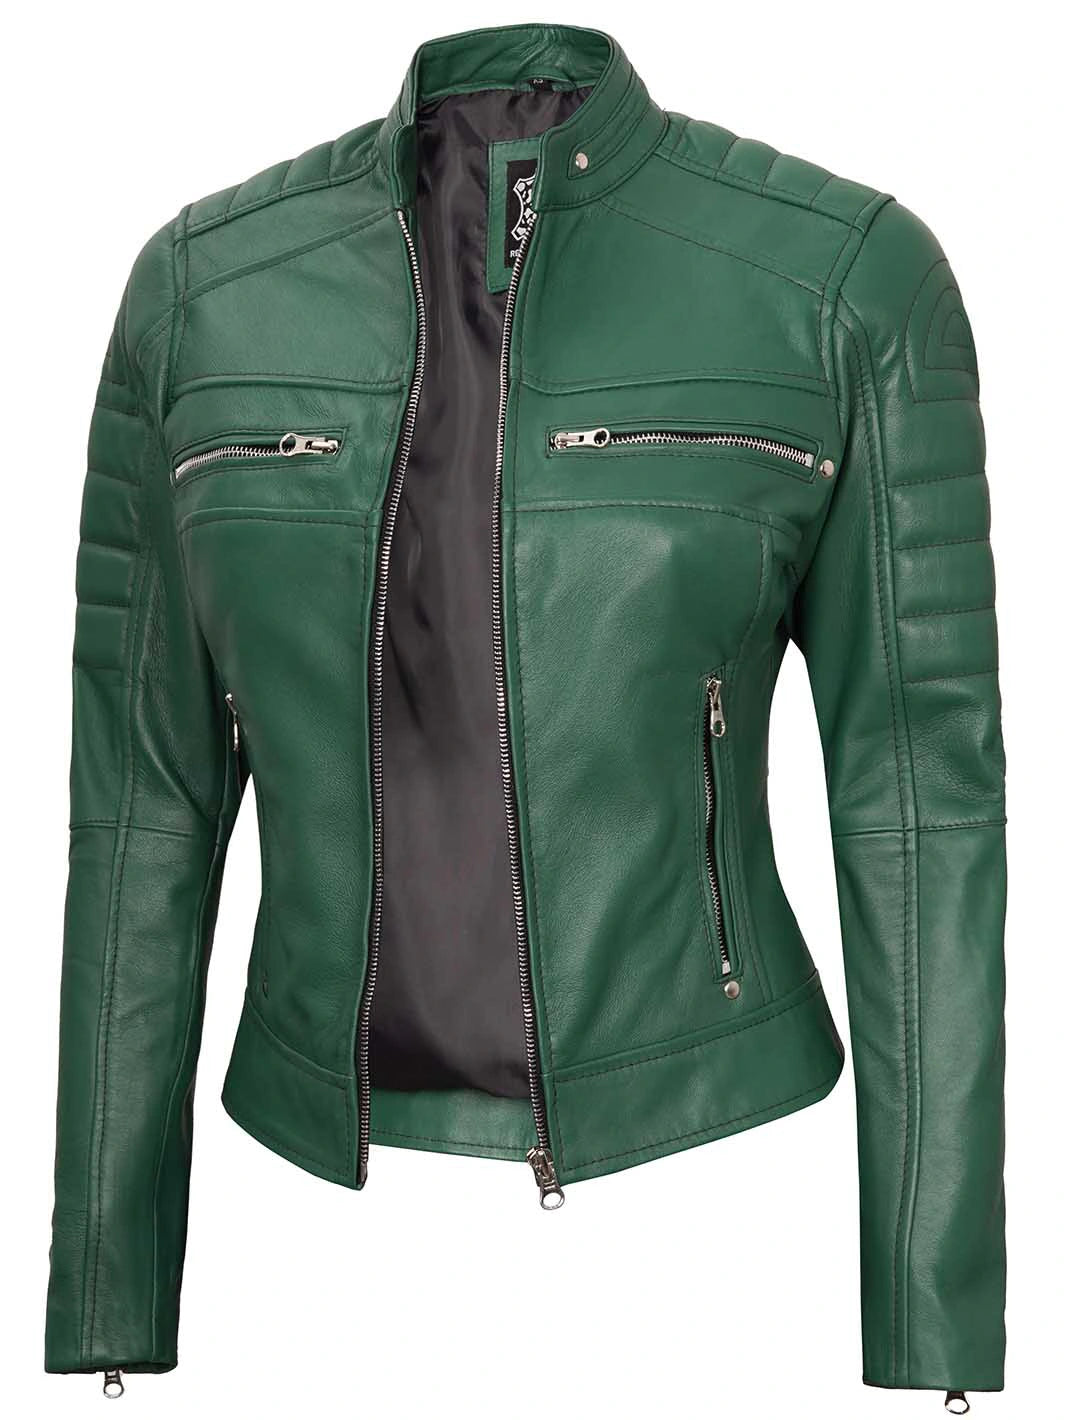 Green cafe racer leather jacket